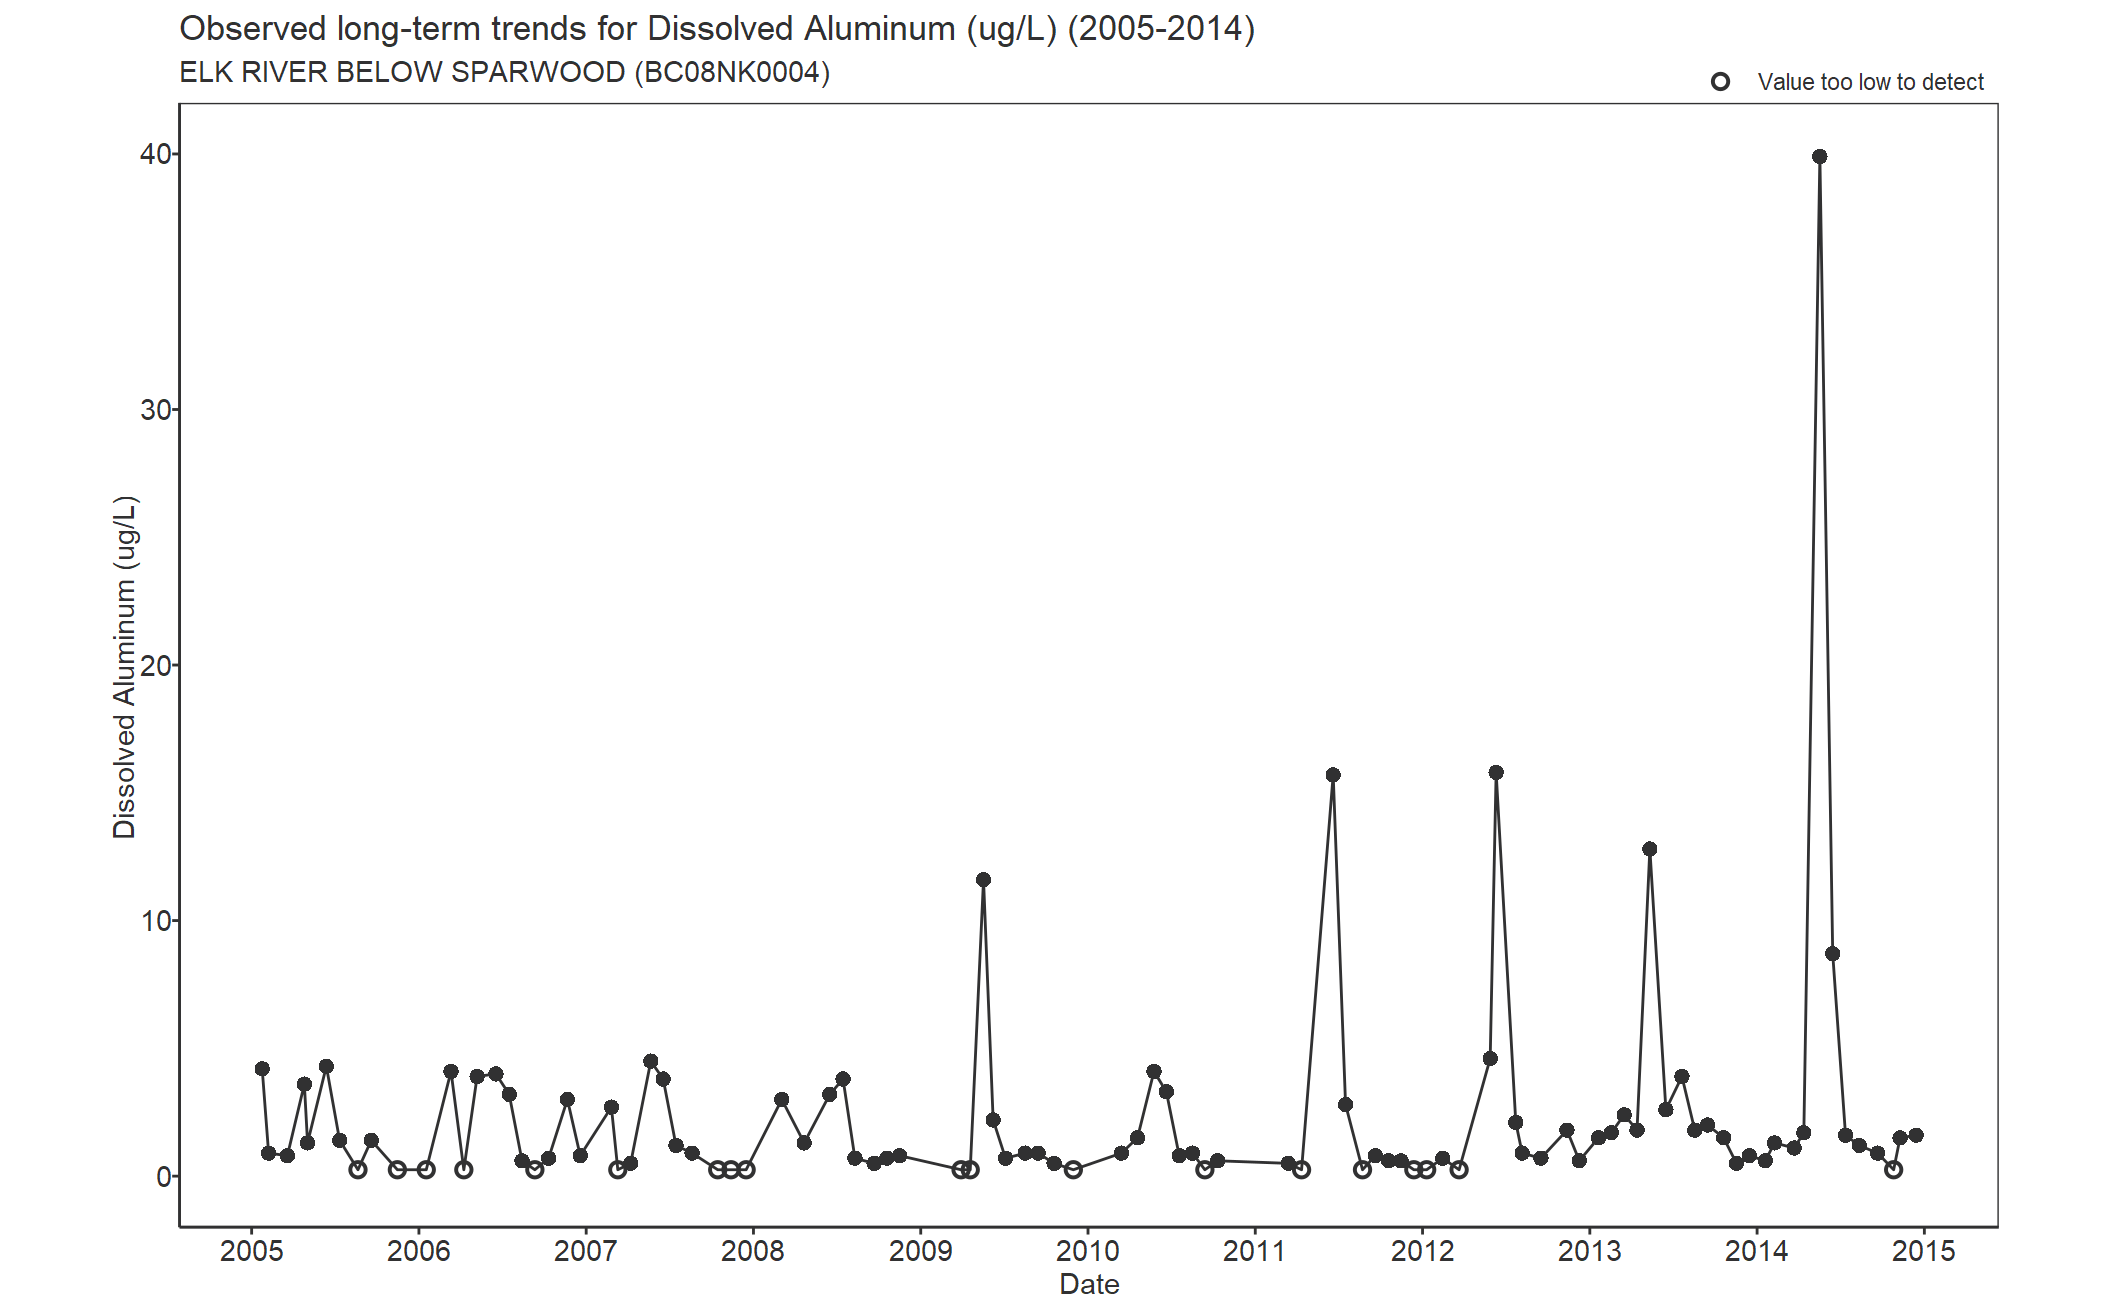 Observed long-term trends for Aluminum Dissolved (2005-2014)